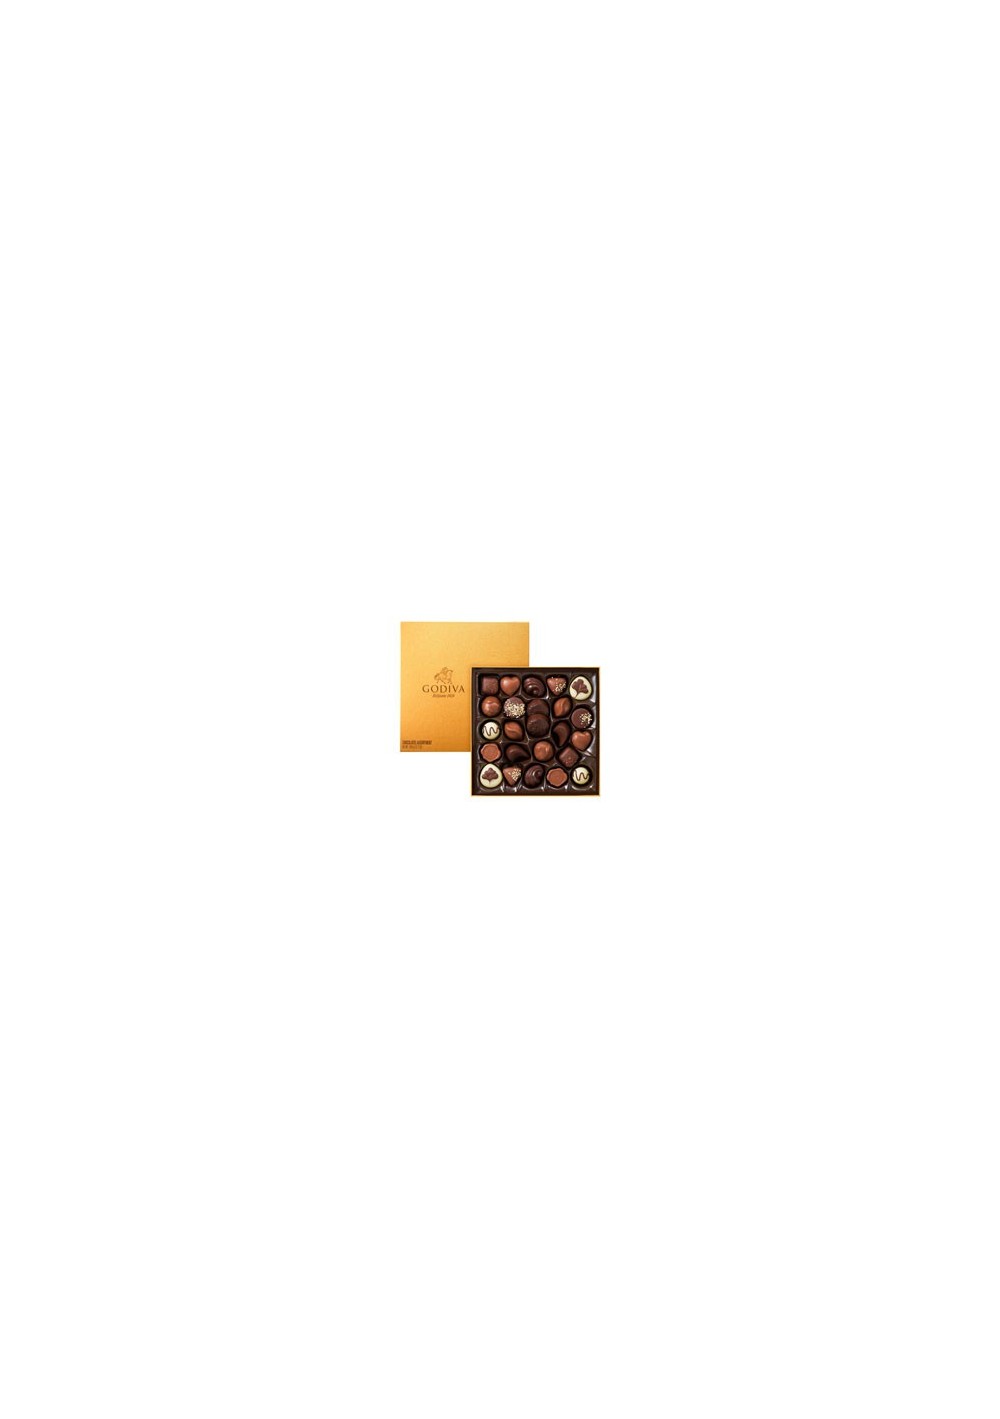 Godiva Hard Box Gold 24 Chocolates